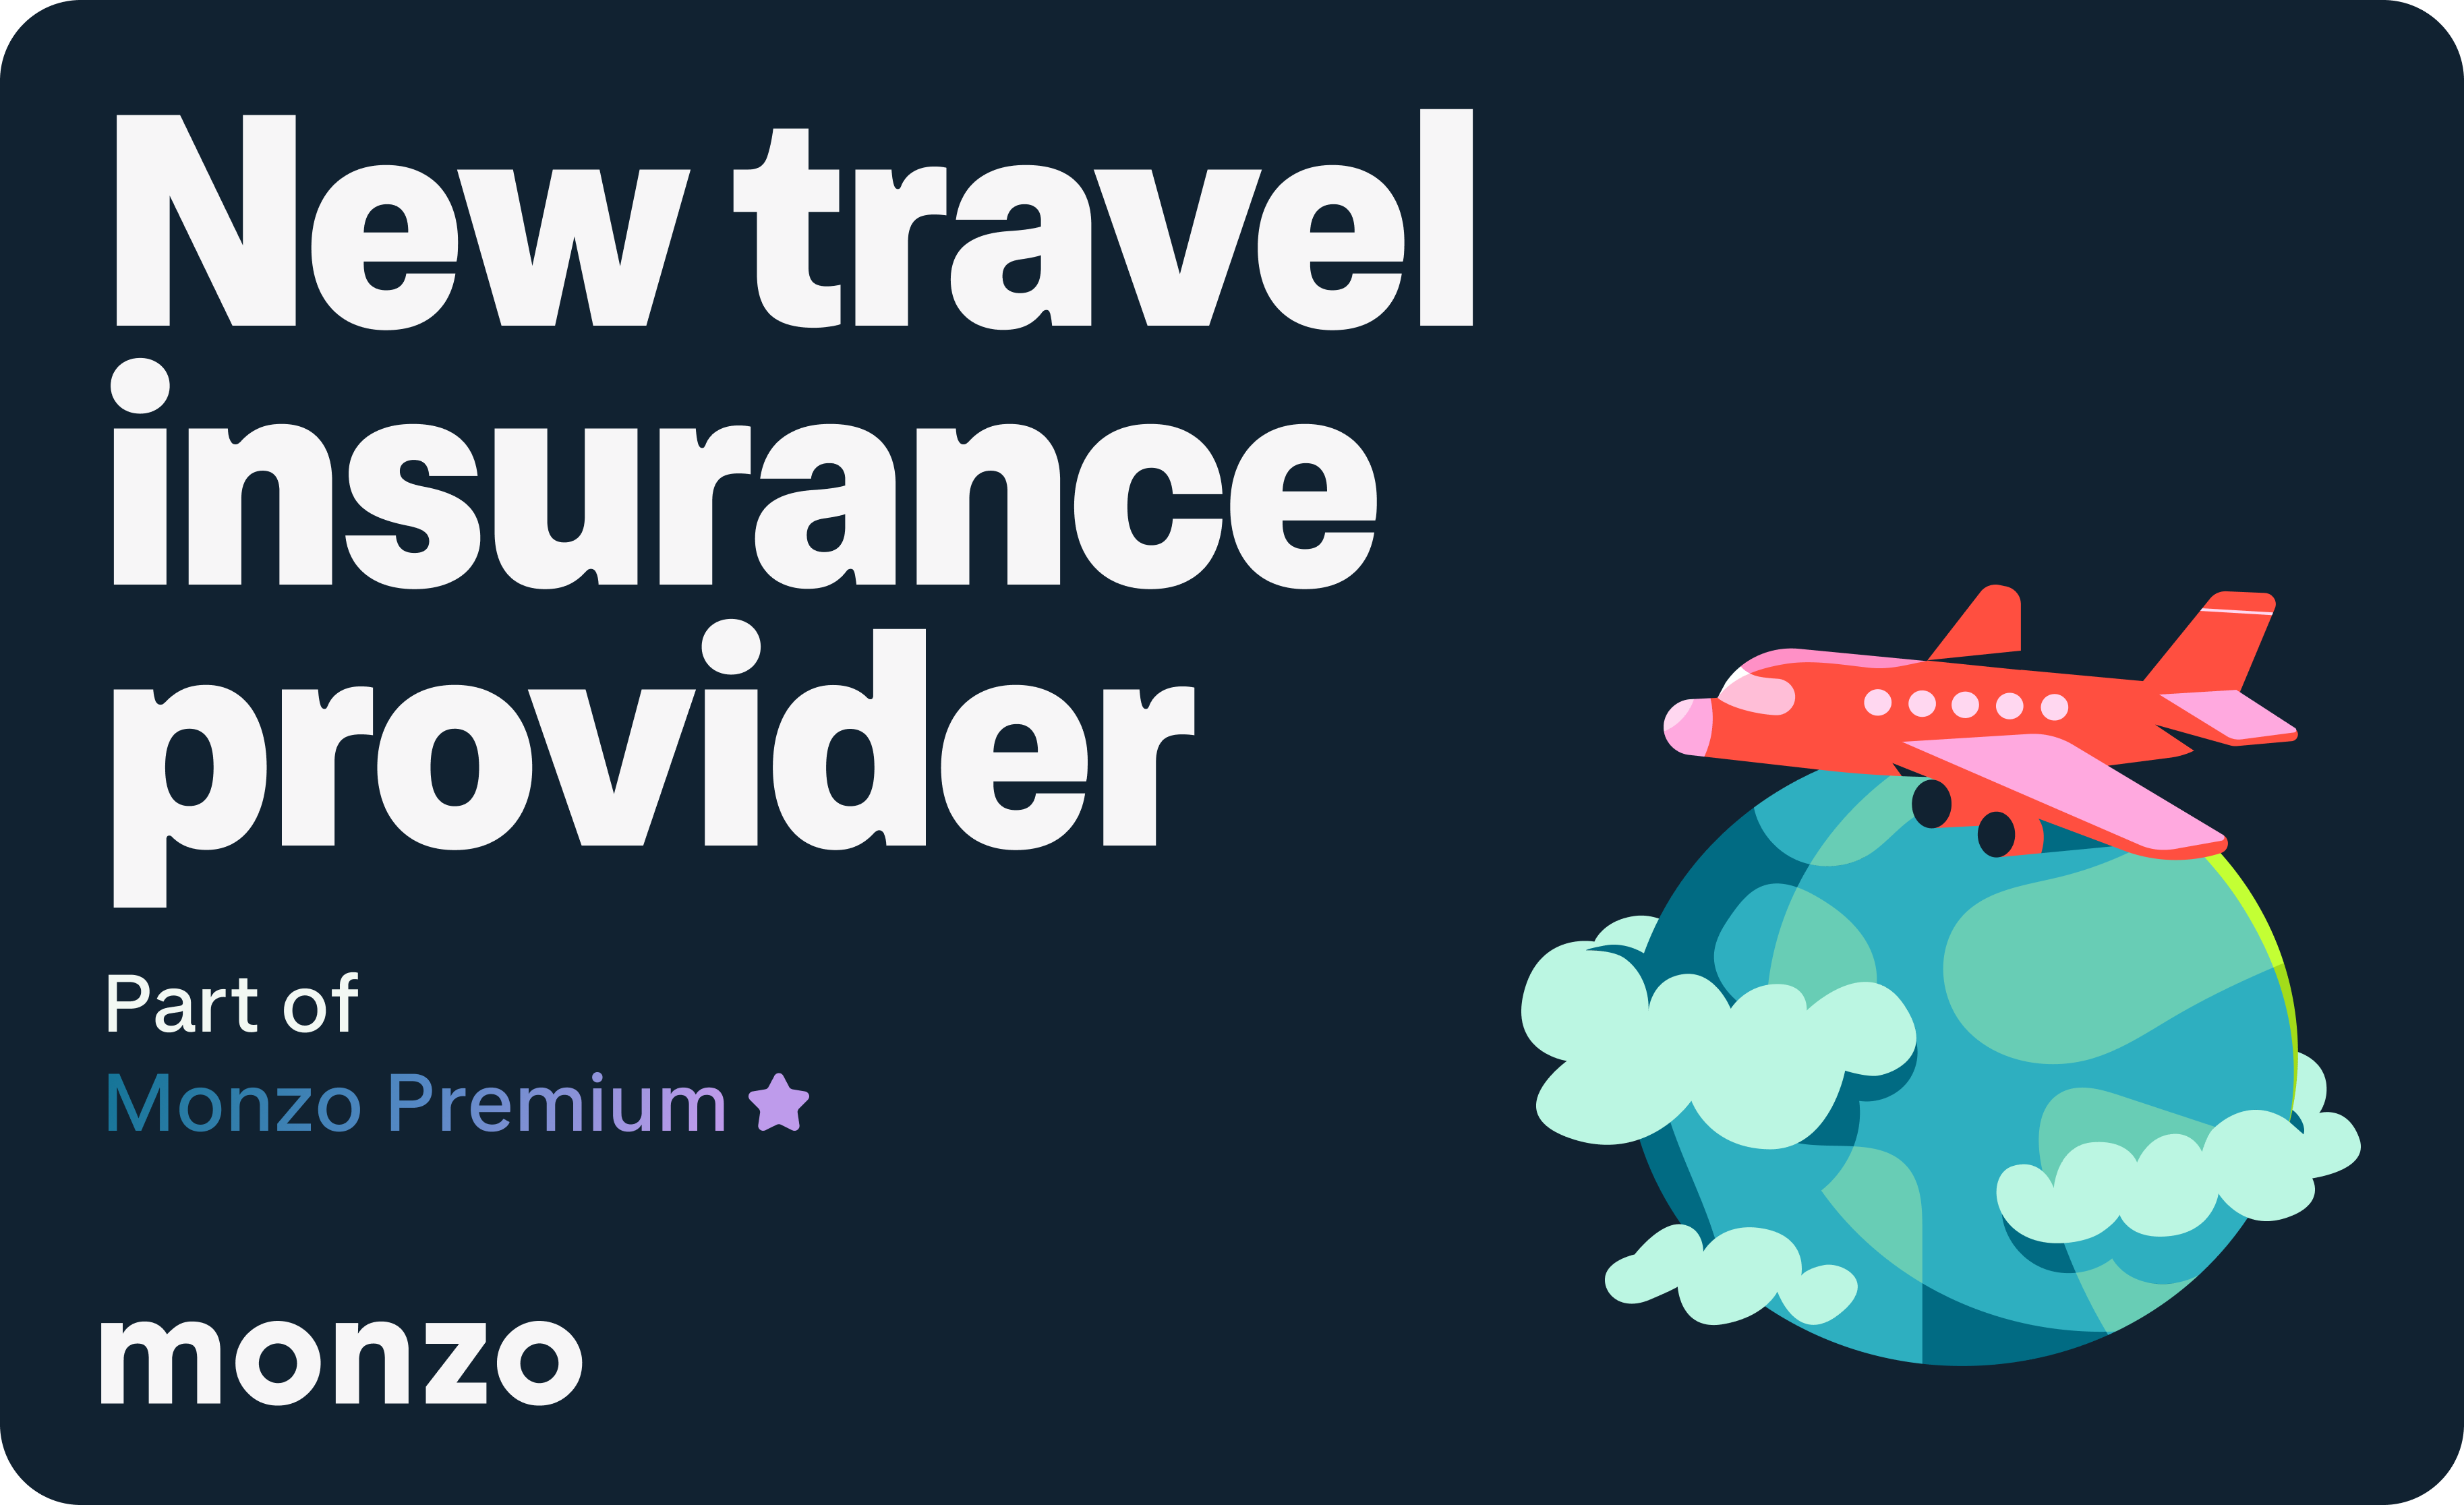 does monzo premium travel insurance cover my partner